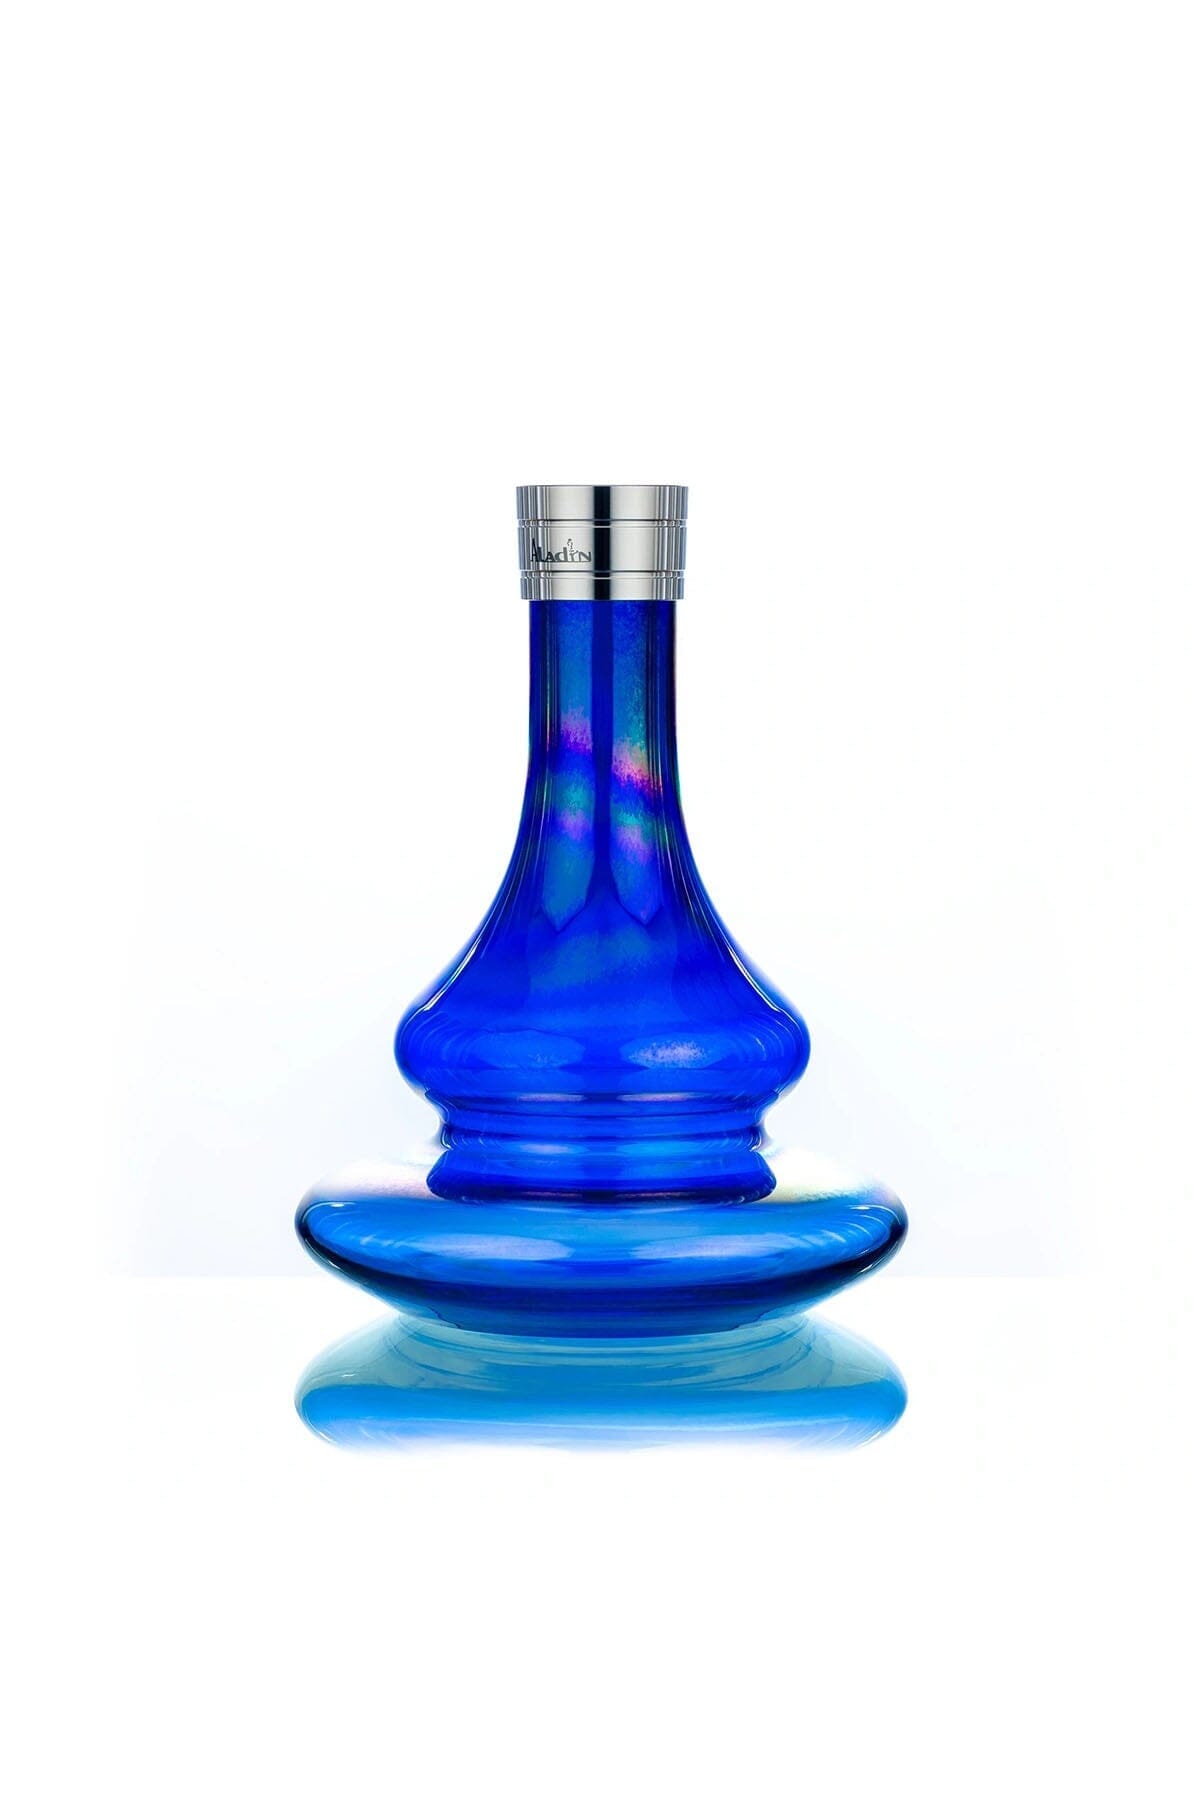 Aladin MVP 500 - Full Shiny Blue